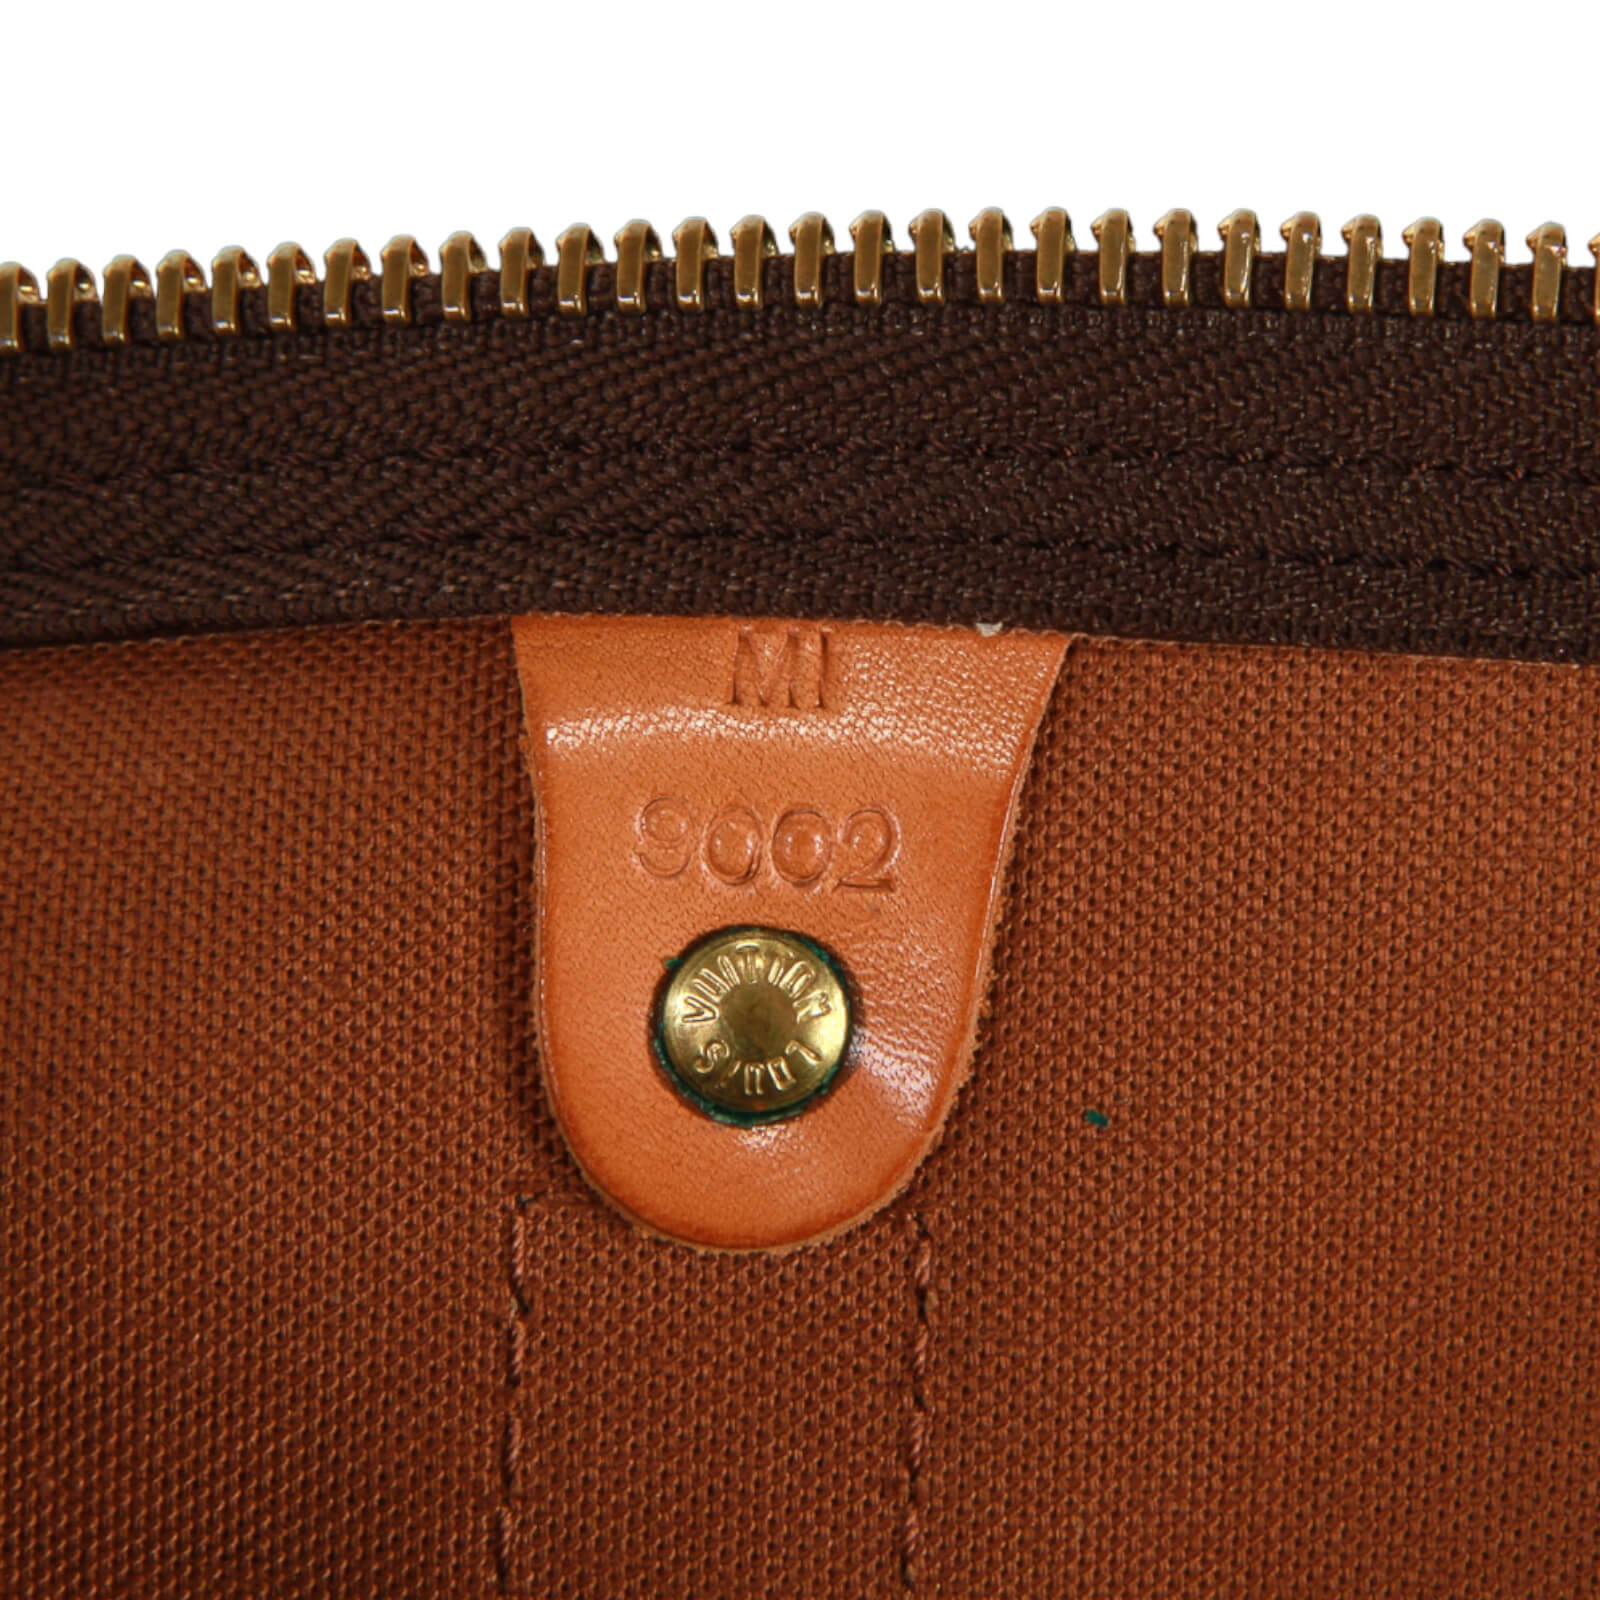 Louis Vuitton Malletier Monogram Keepall 60 – THE BAG